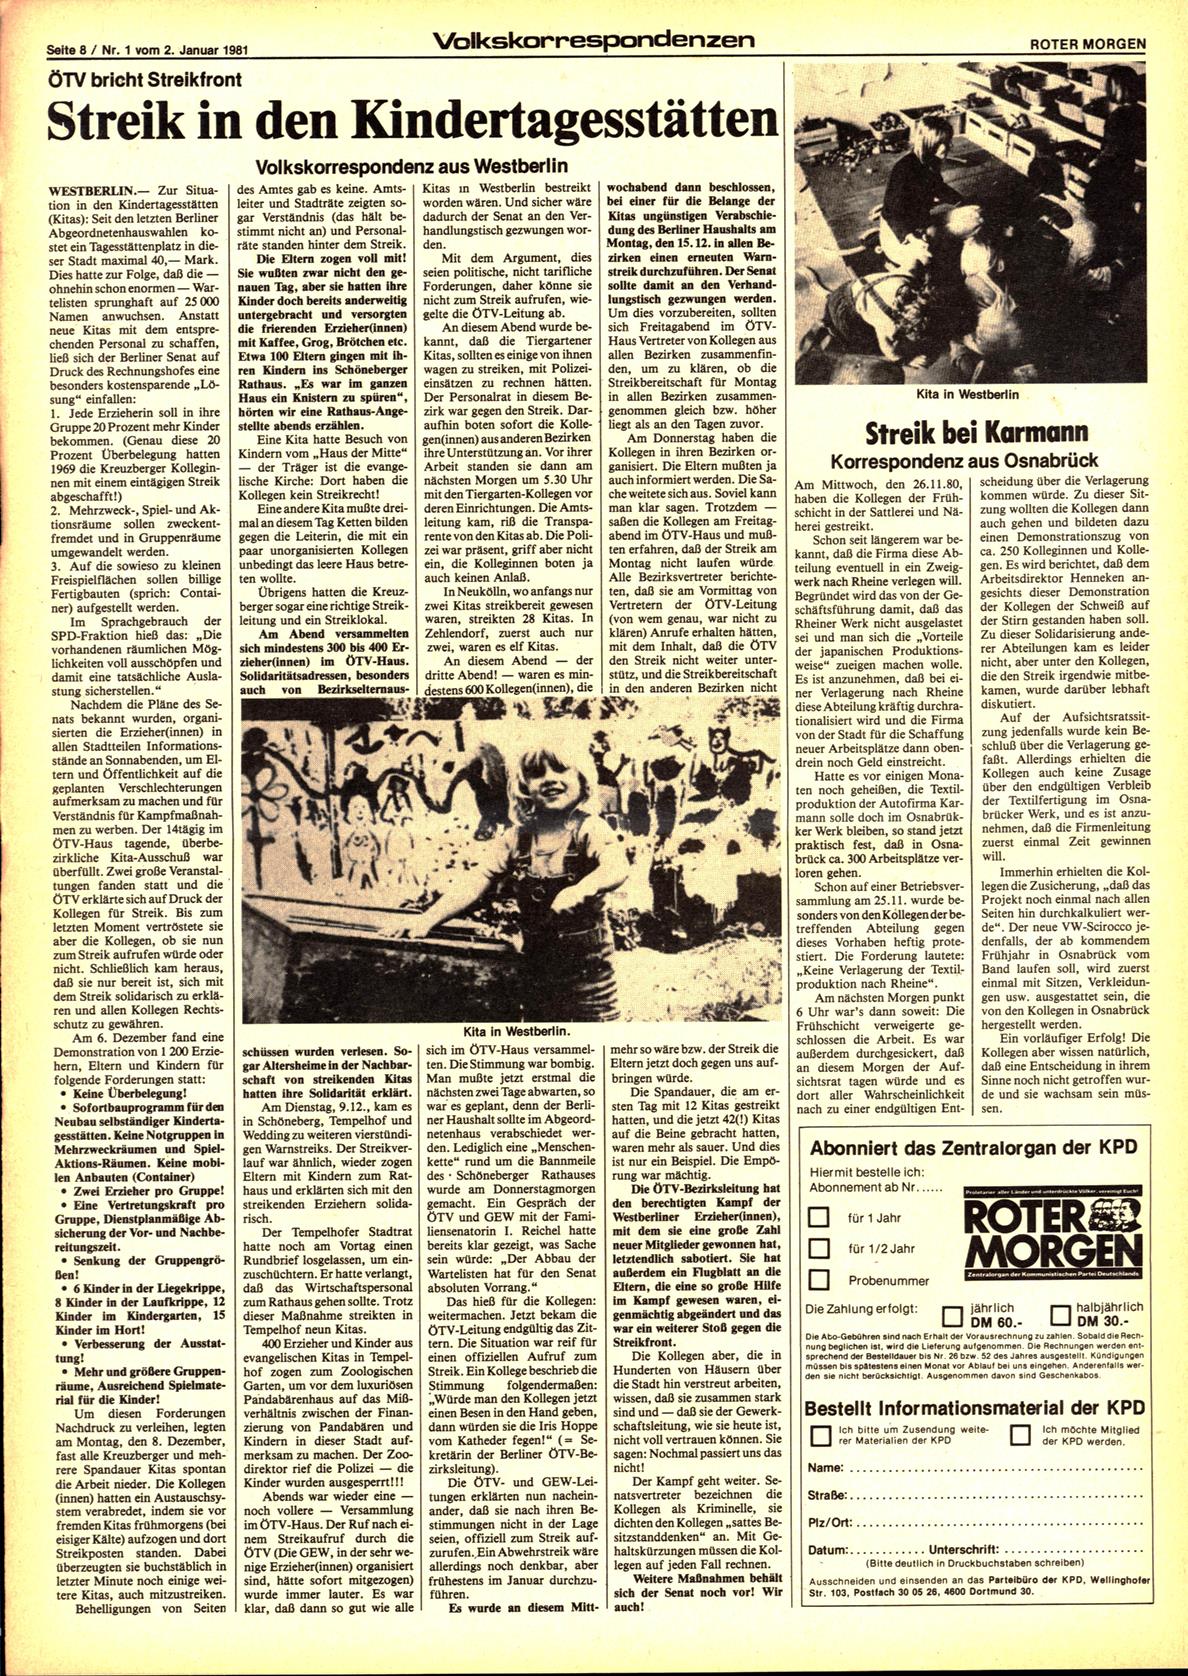 Roter Morgen, 15. Jg., 2. Januar 1981, Nr. 1, Seite 8